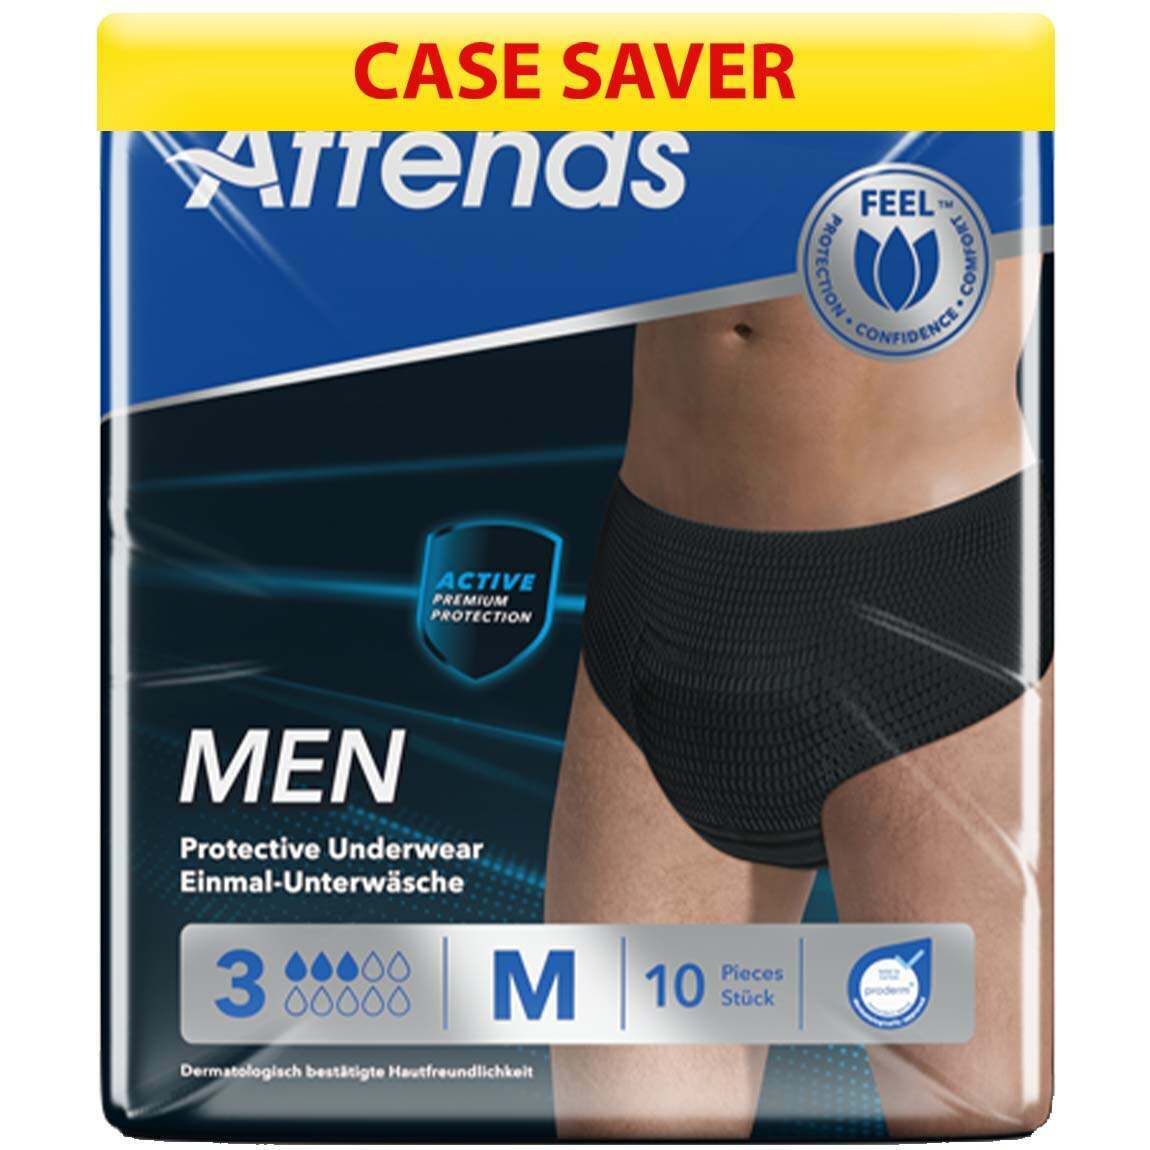 https://cdn.incontinenceshop.com/media/catalog/product/cache/7fbcc4e95ea9ab79d08dd7c7463f9f81/image/114716db0/attends-men-discreet-underwear-medium-case-6-packs-of-10.jpg